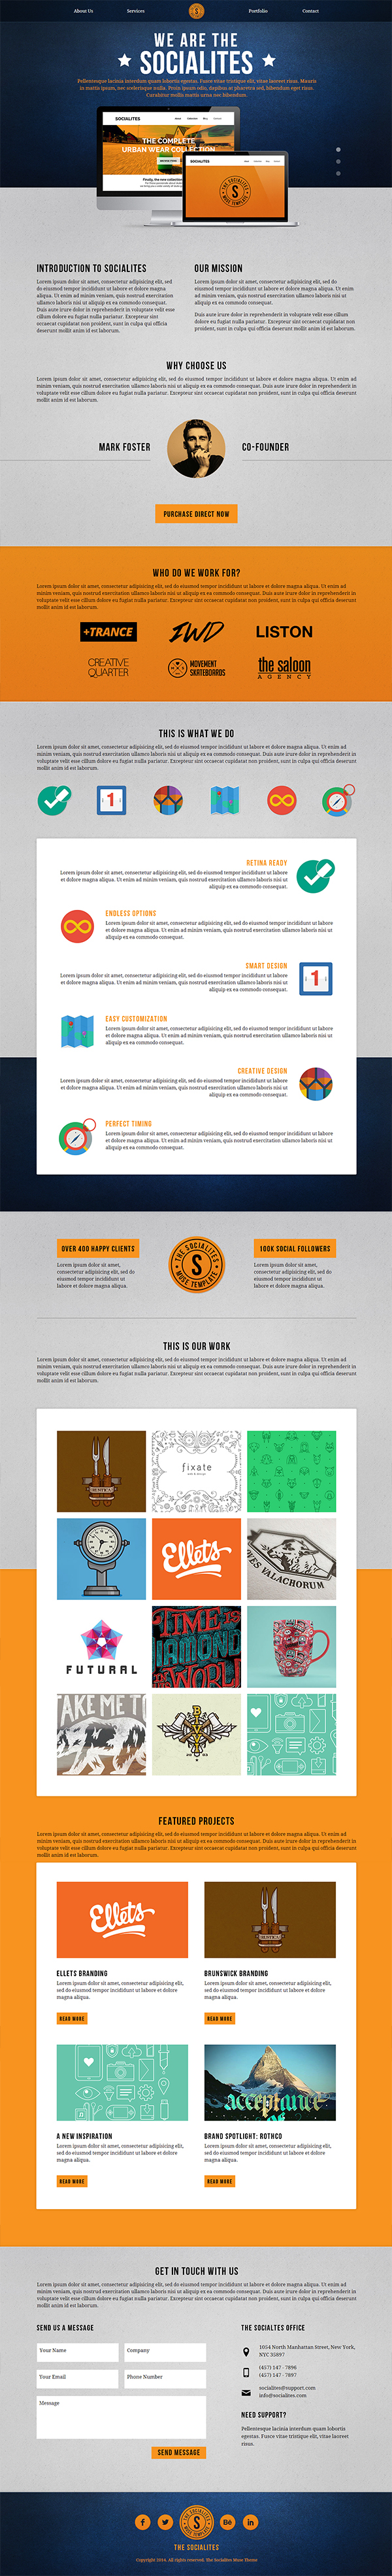 Web design muse showcase texture template